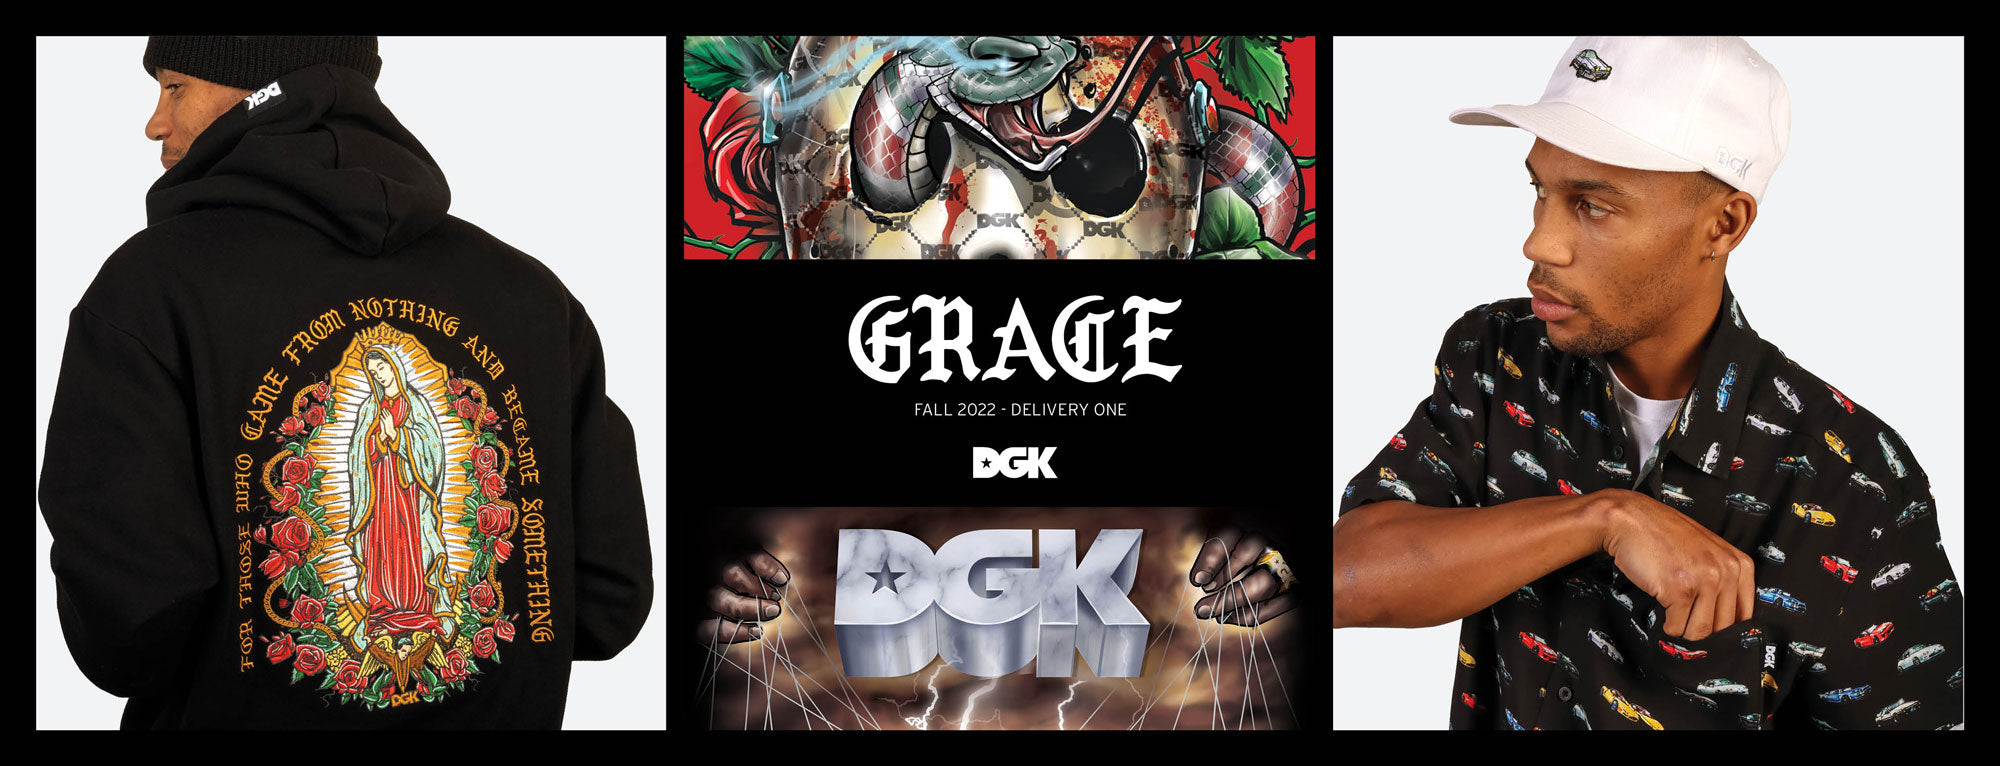 DGK Fall 2022 - Grace Collection